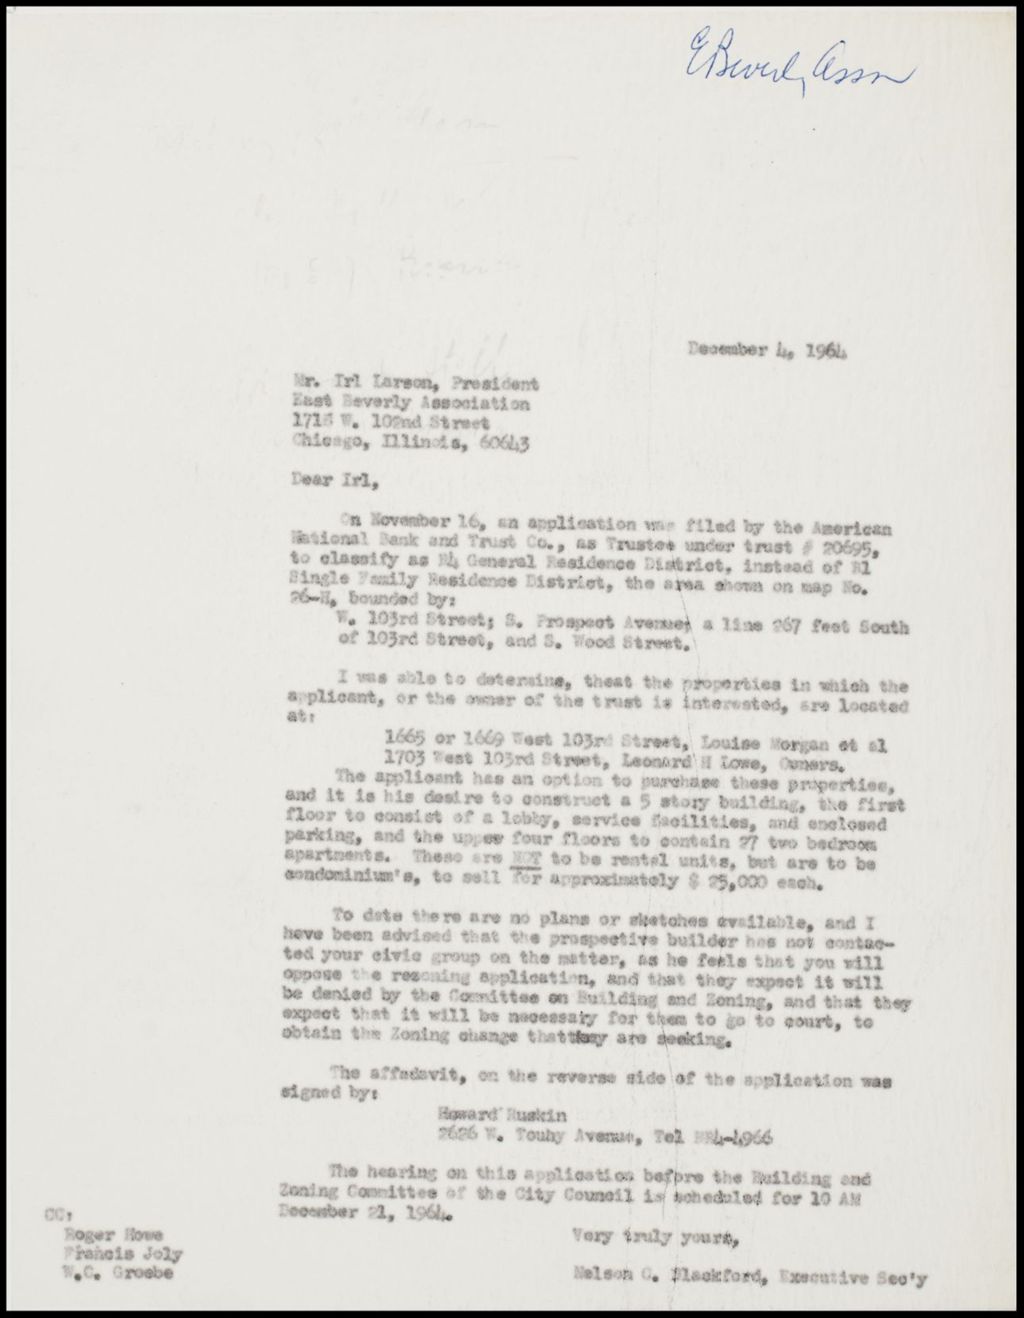 East Beverly Association - correspondence, 1964-1966 (Folder 94)